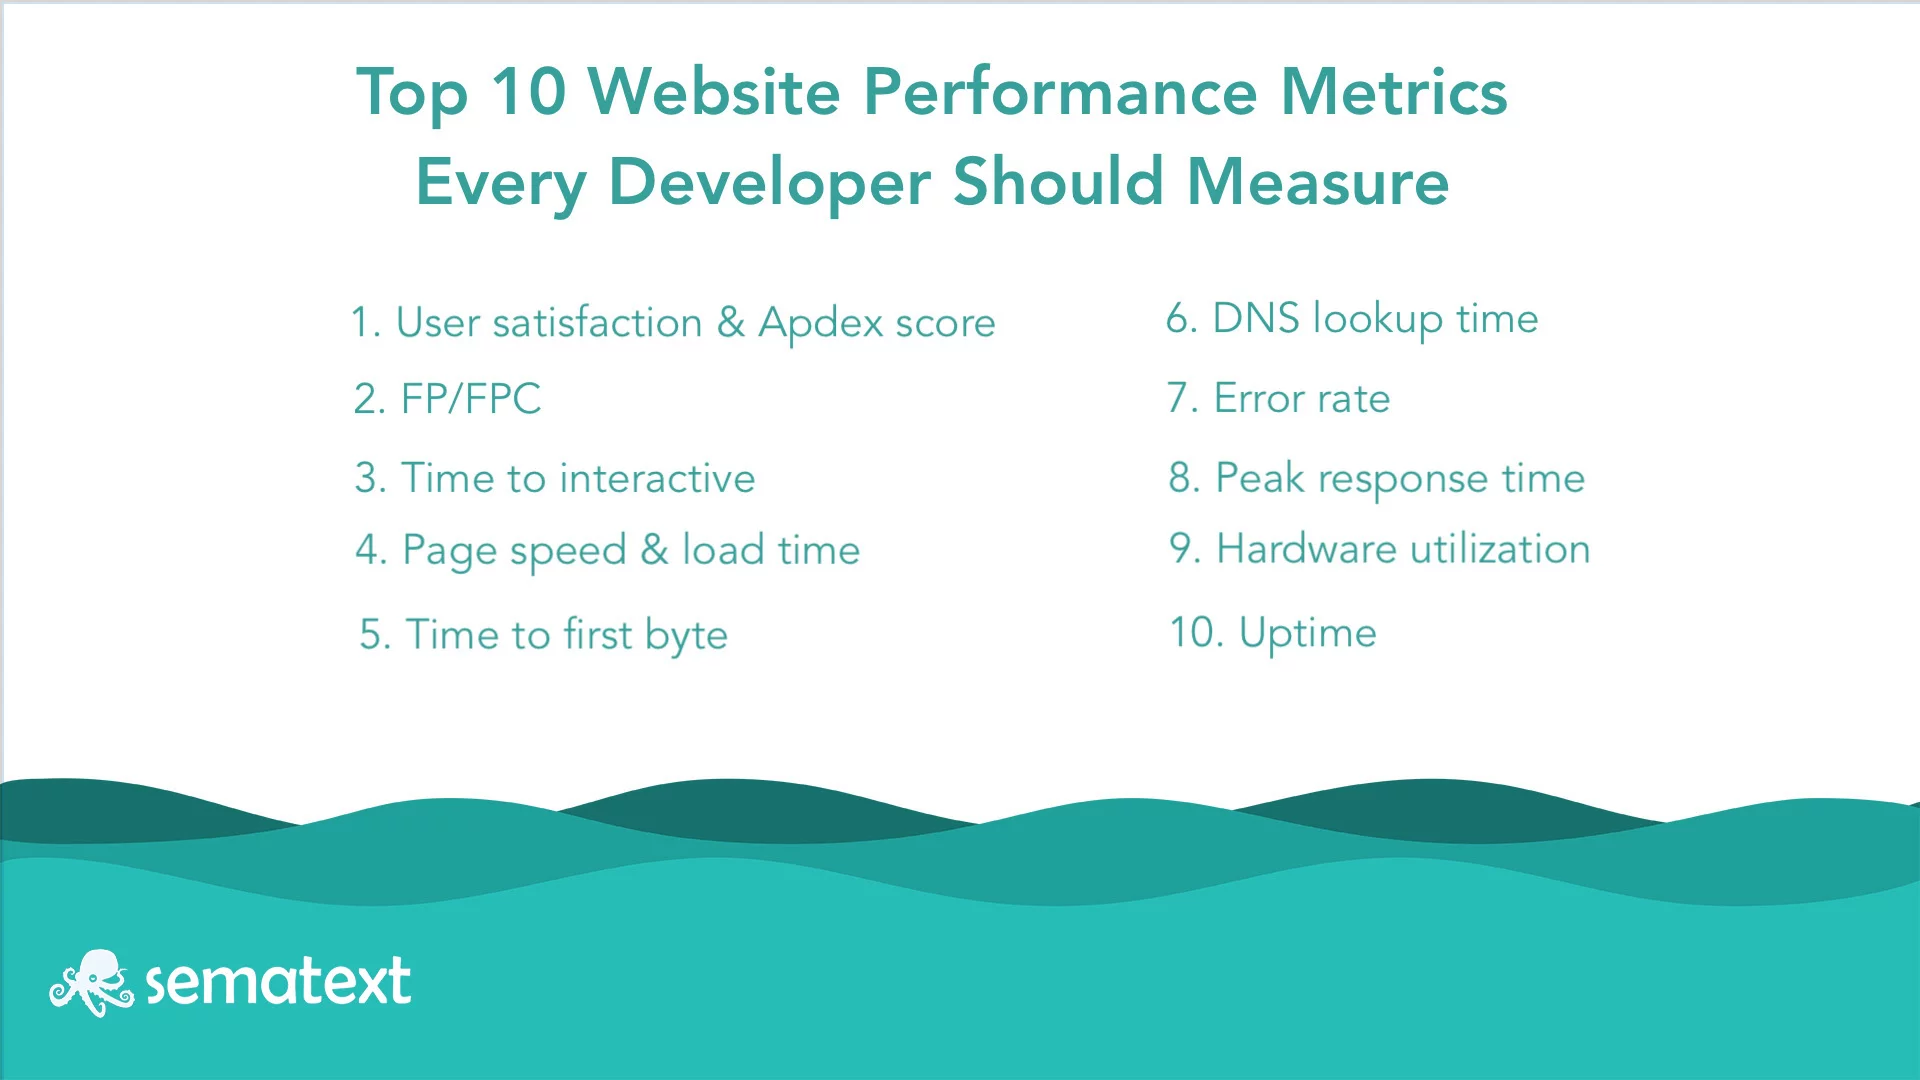 Effective website performance management